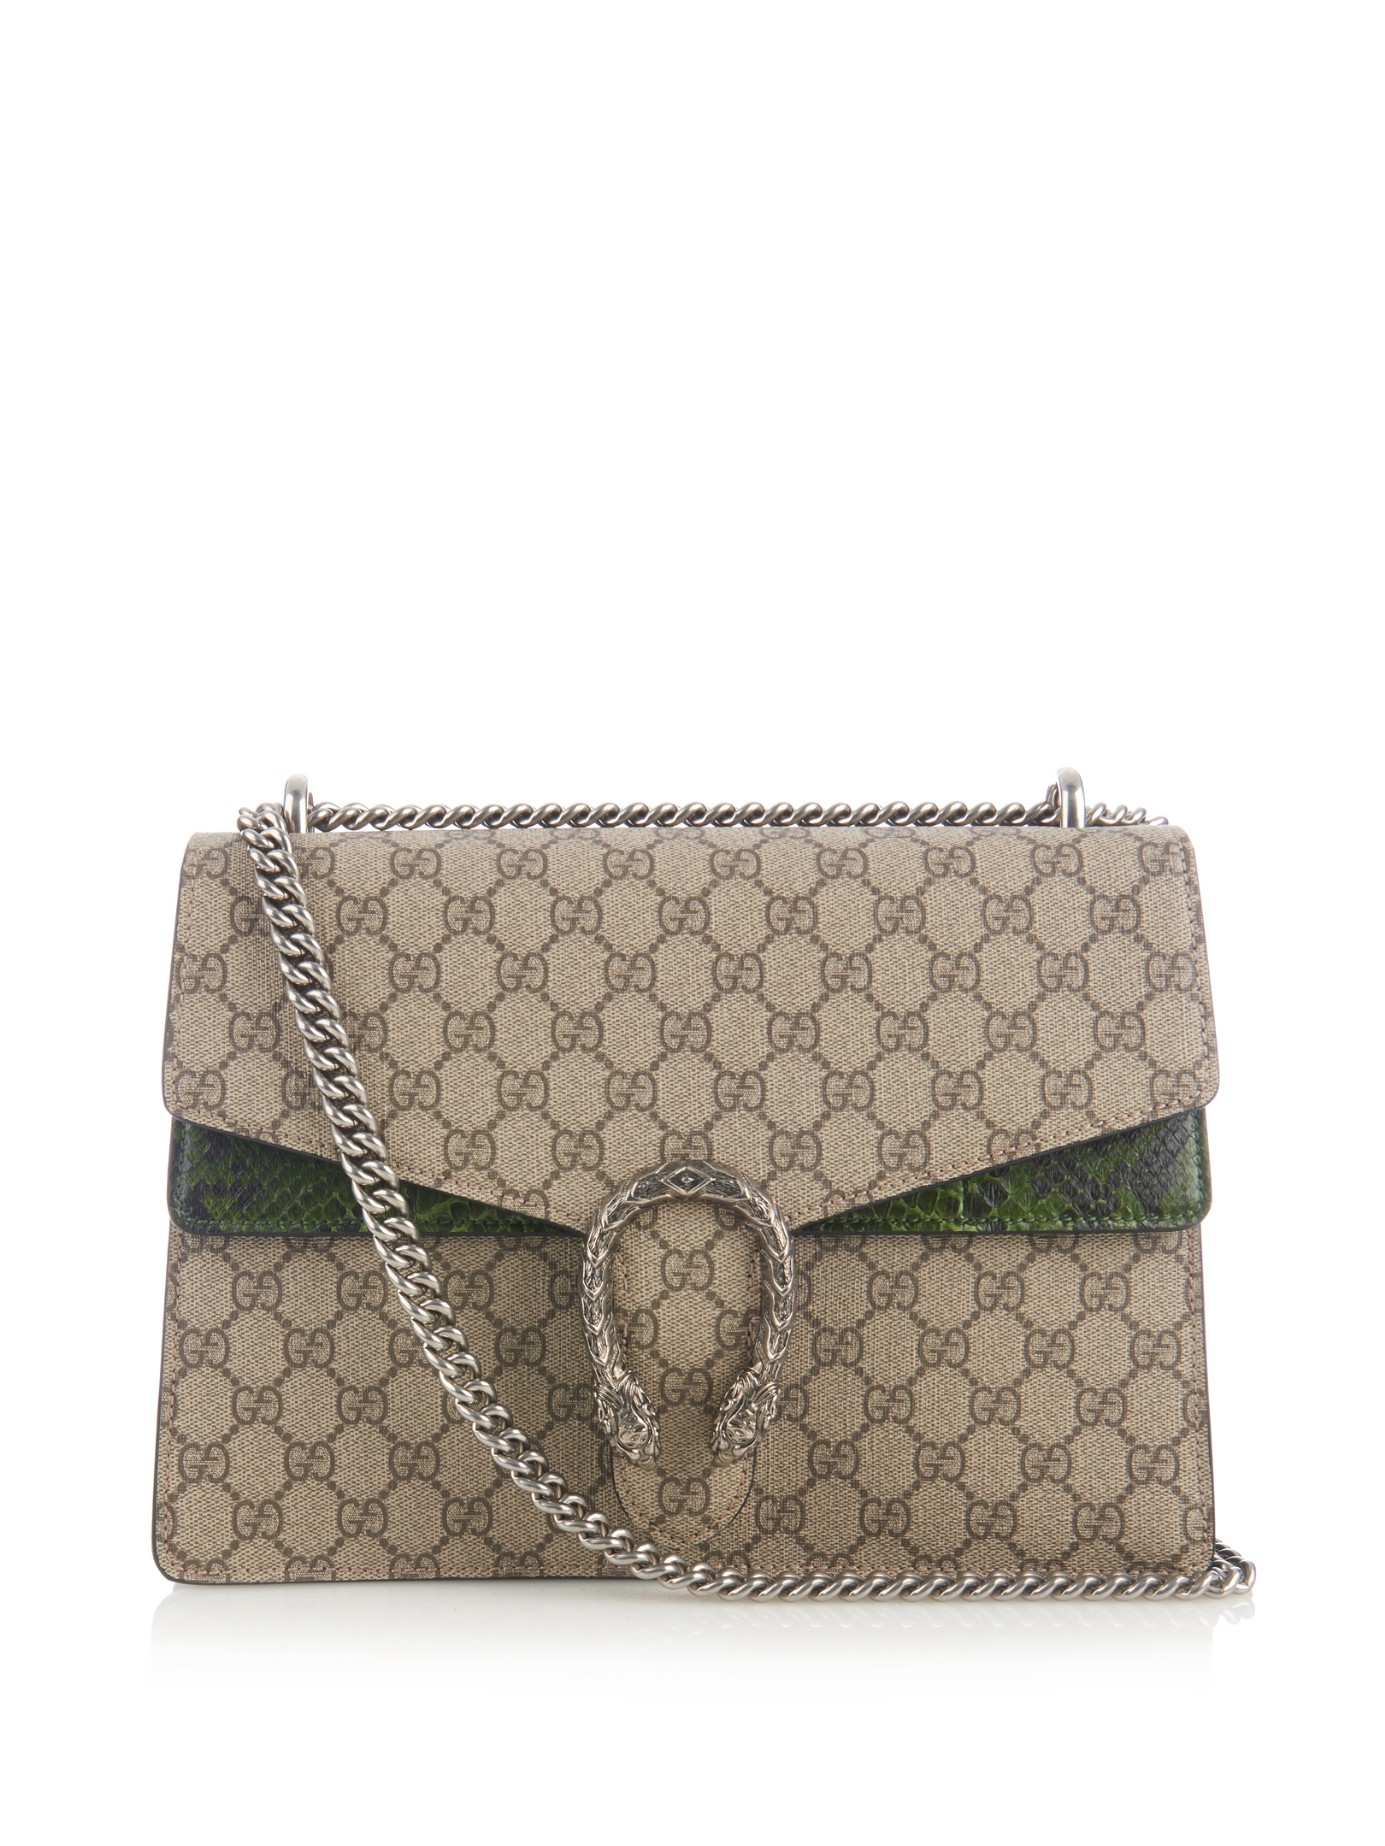 Lyst - Gucci Dionysus Gg Supreme Canvas Shoulder Bag in Green